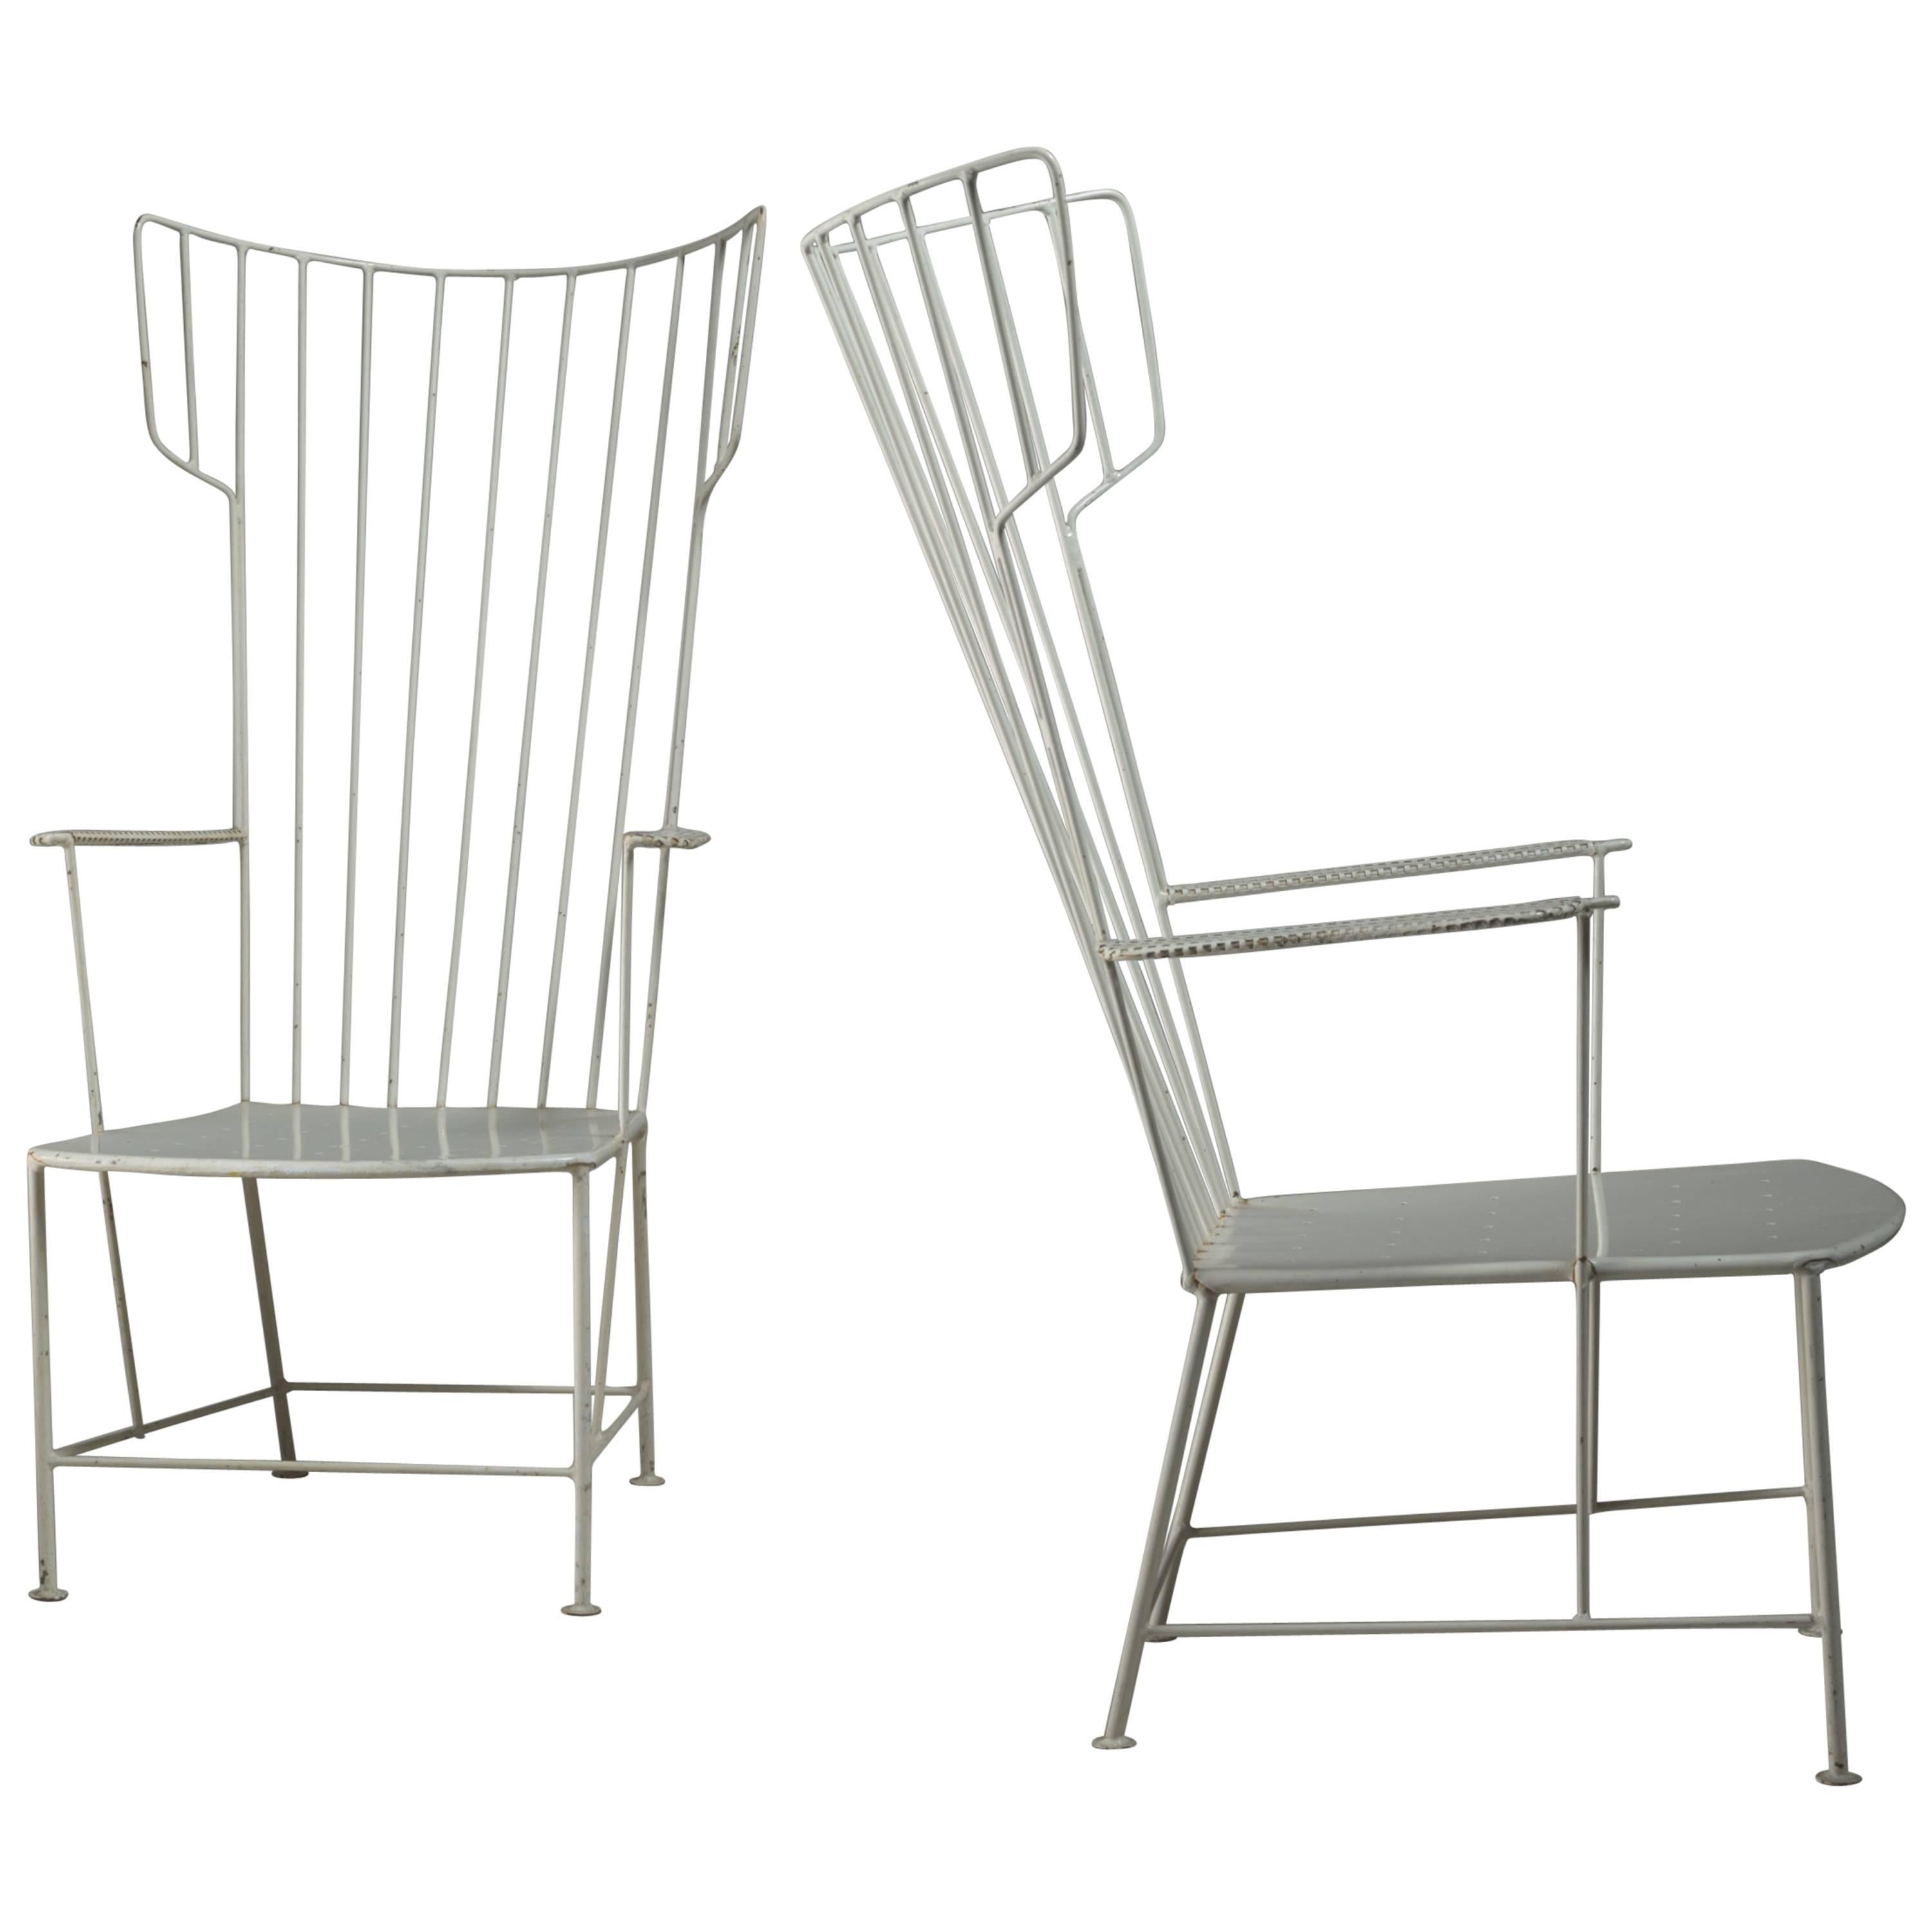 Praun and Lauterbach Pair of White Metal Garden Chairs, Austria, 1950s For Sale